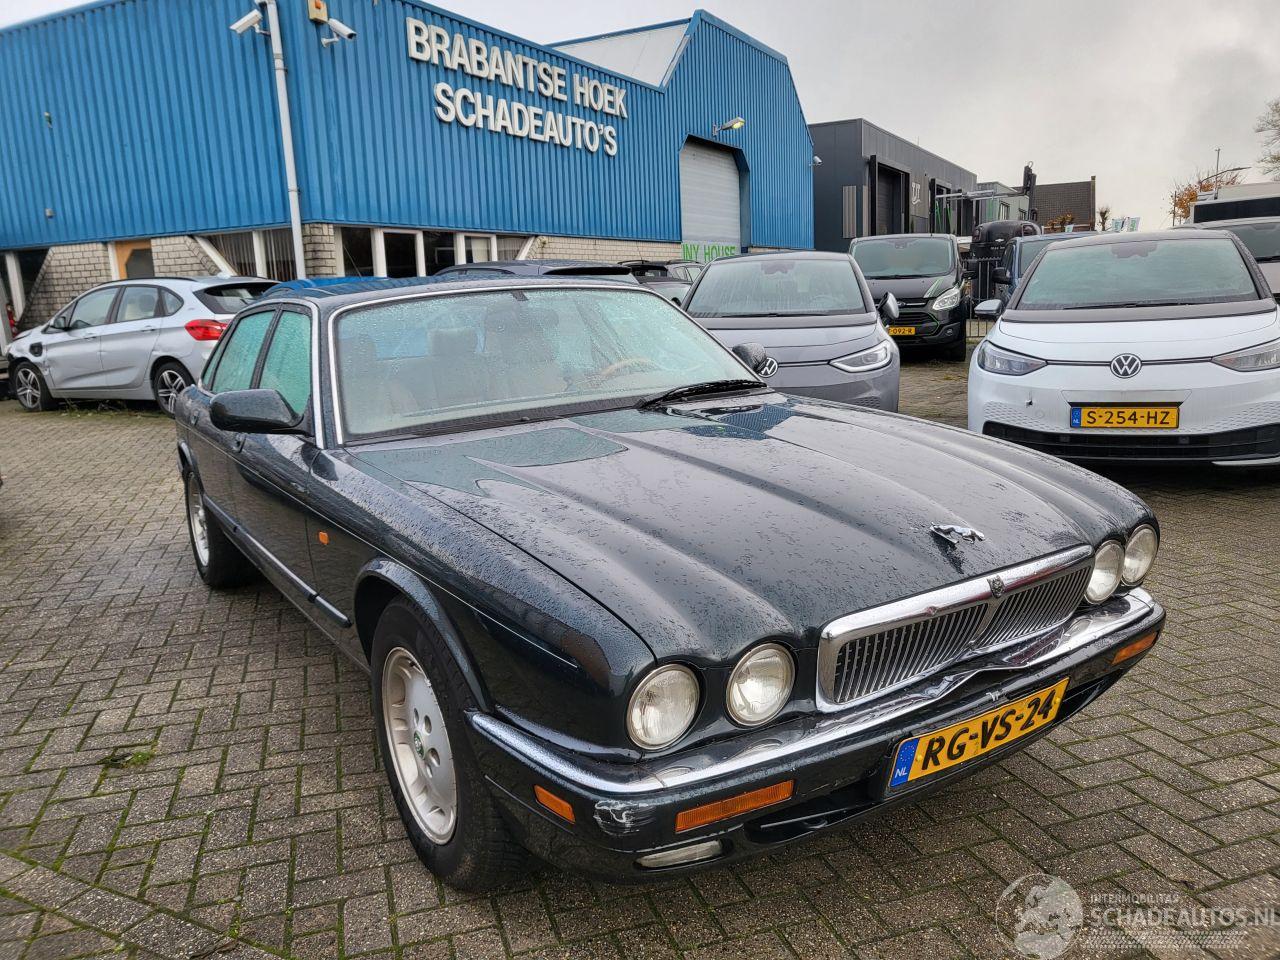 Jaguar XJ EXECUTIVE 3.2 orgineel in nederland gelevert met N.A.P